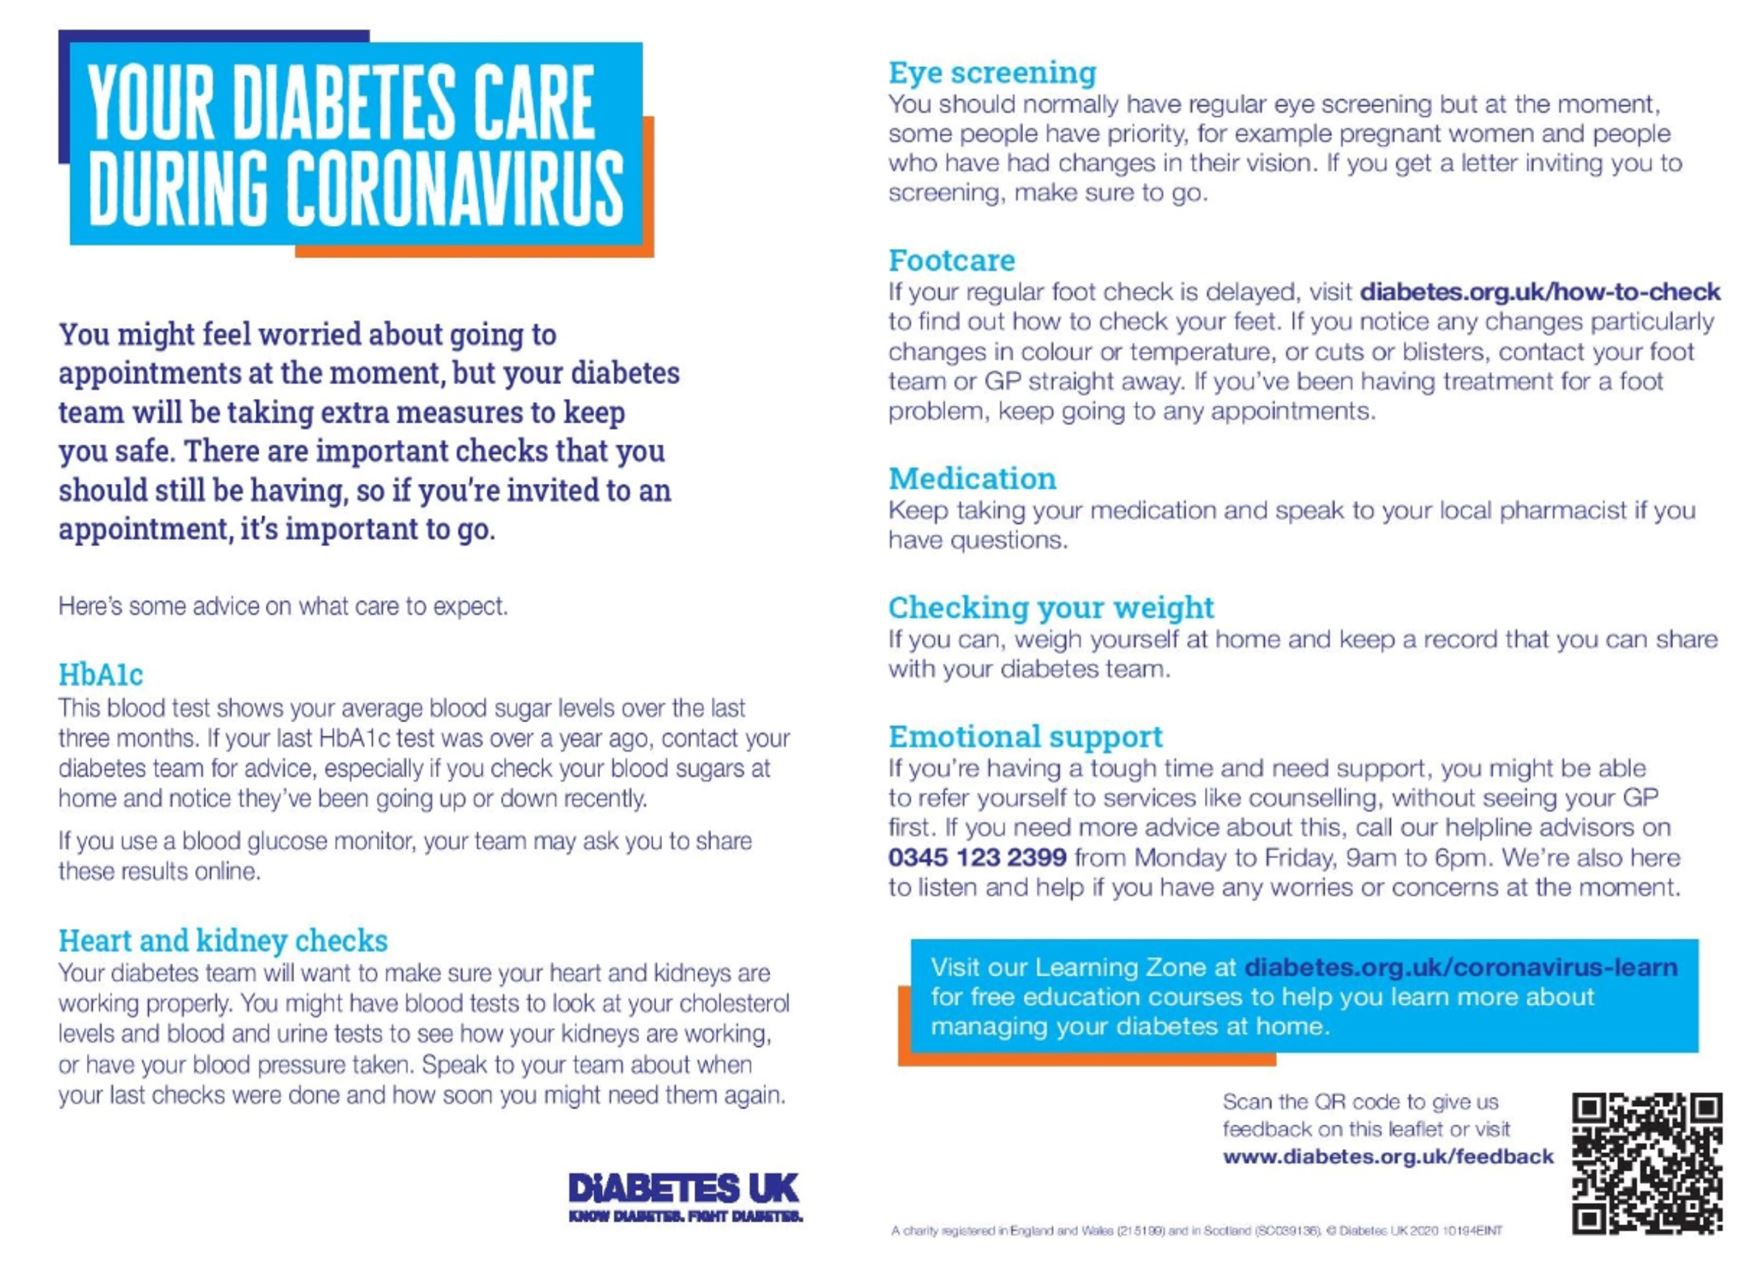 Your Diabetes Care During Coronavirus